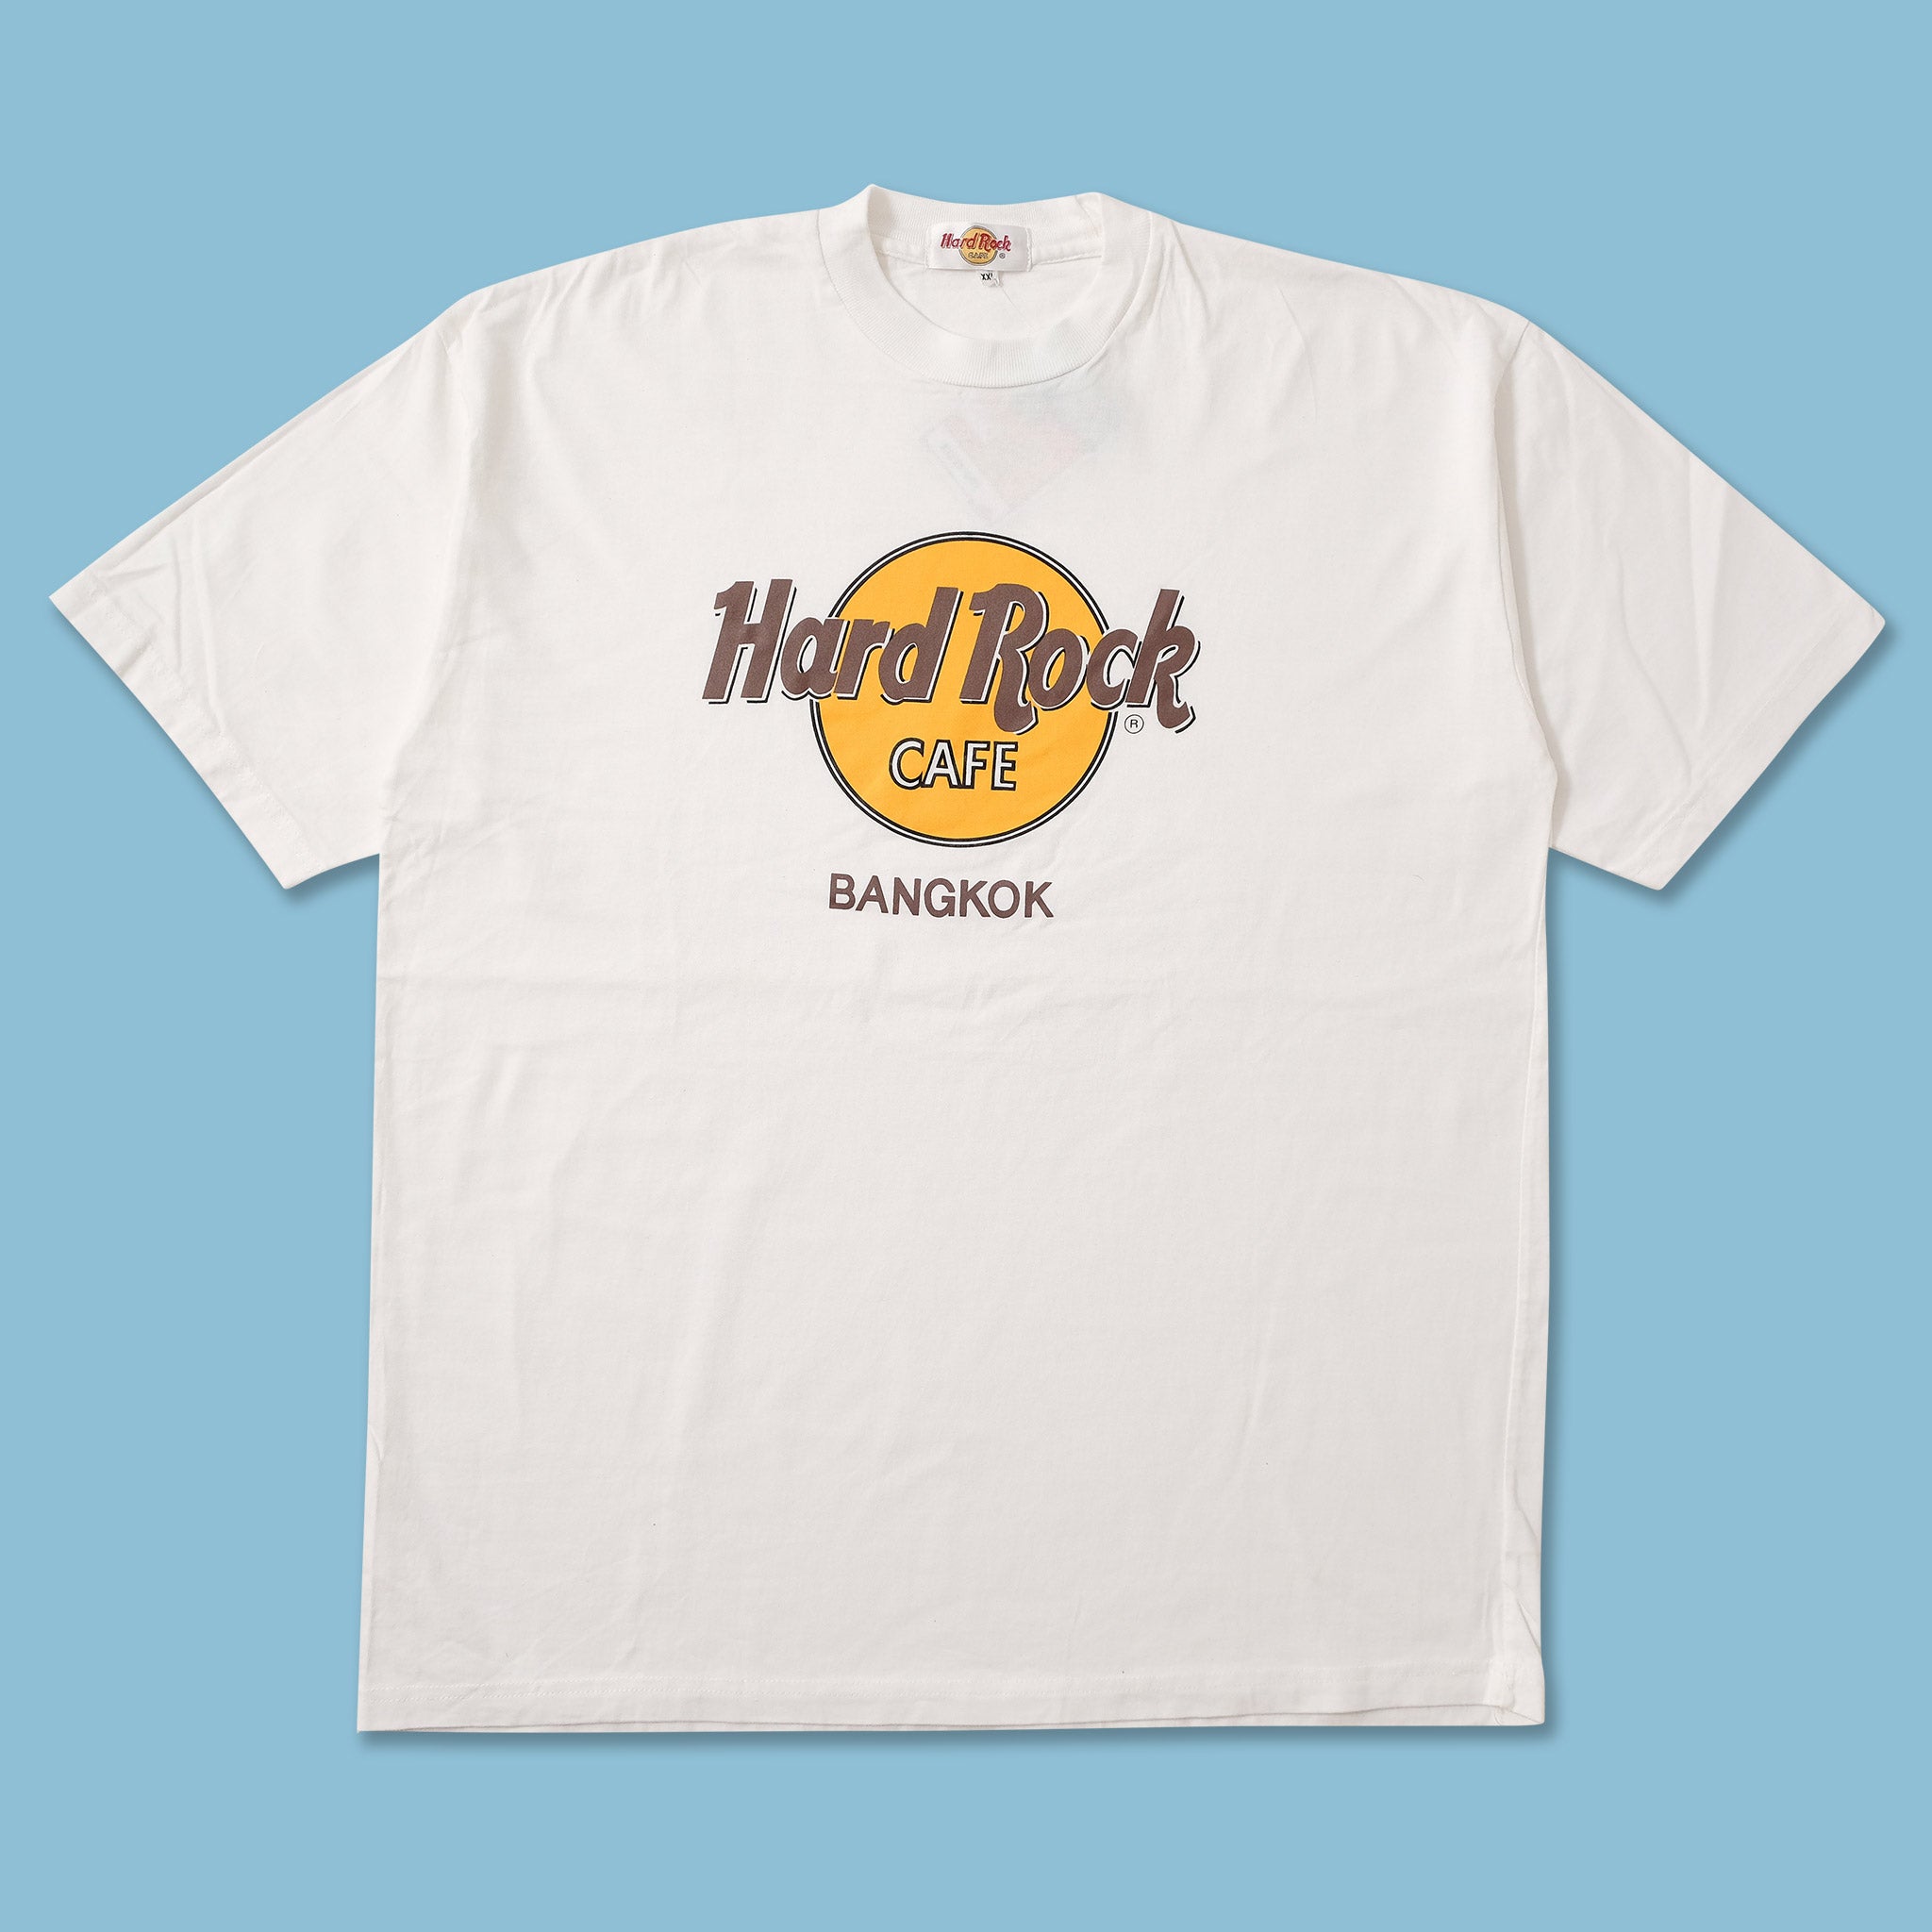 HardRock Cafe T-shirtハードロックカフェTシャツ - トップス